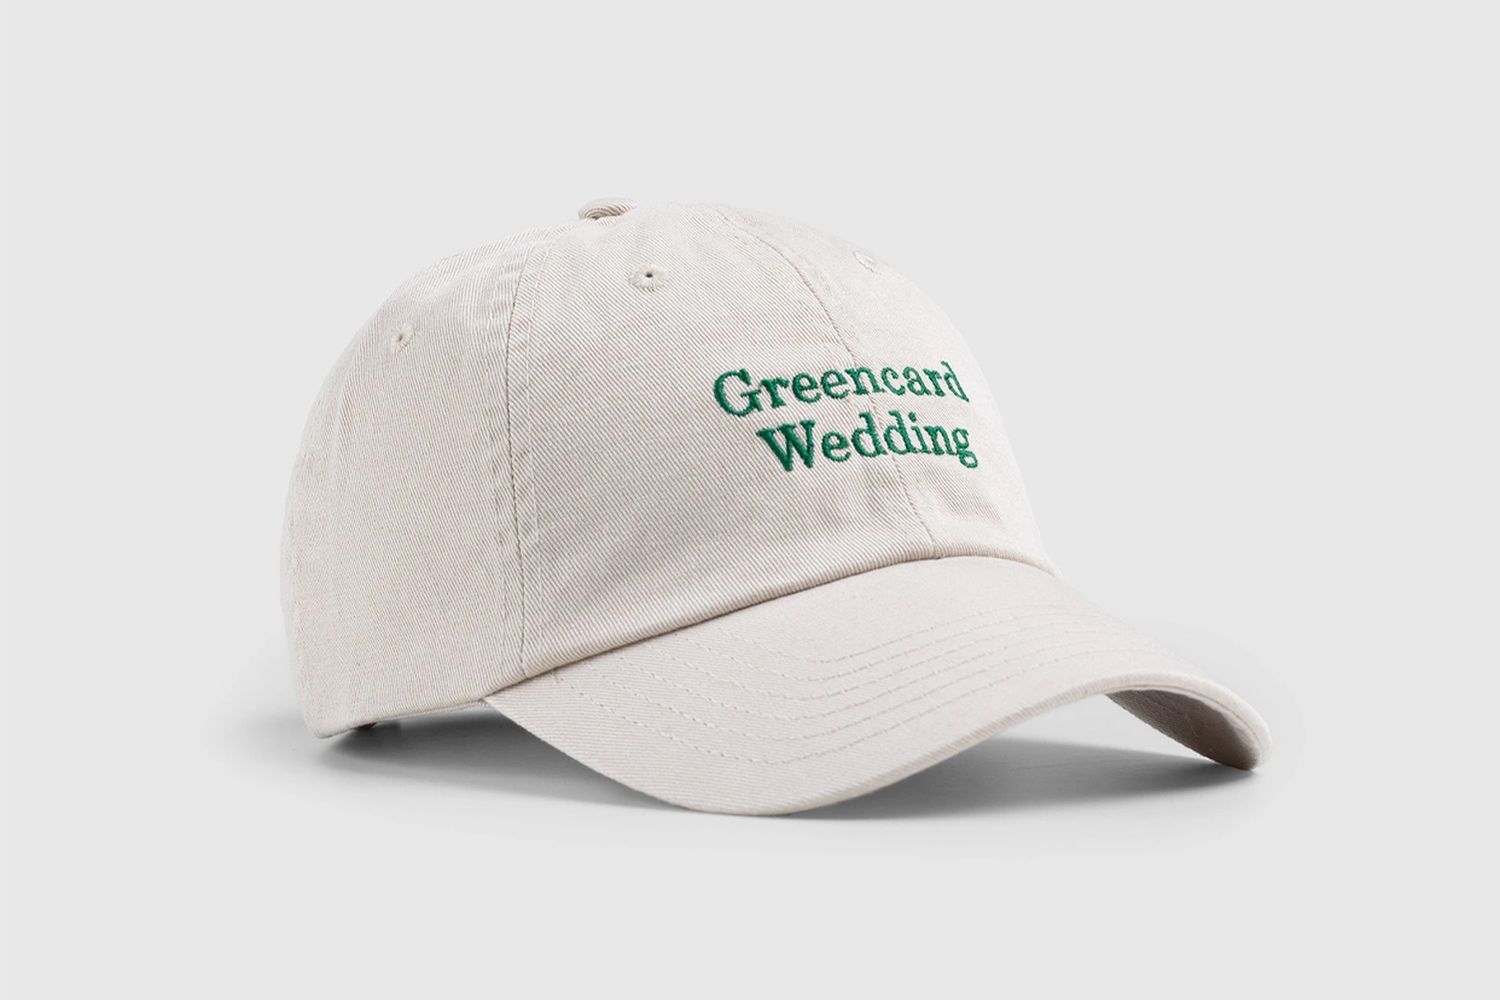 Greencard Wedding Cap